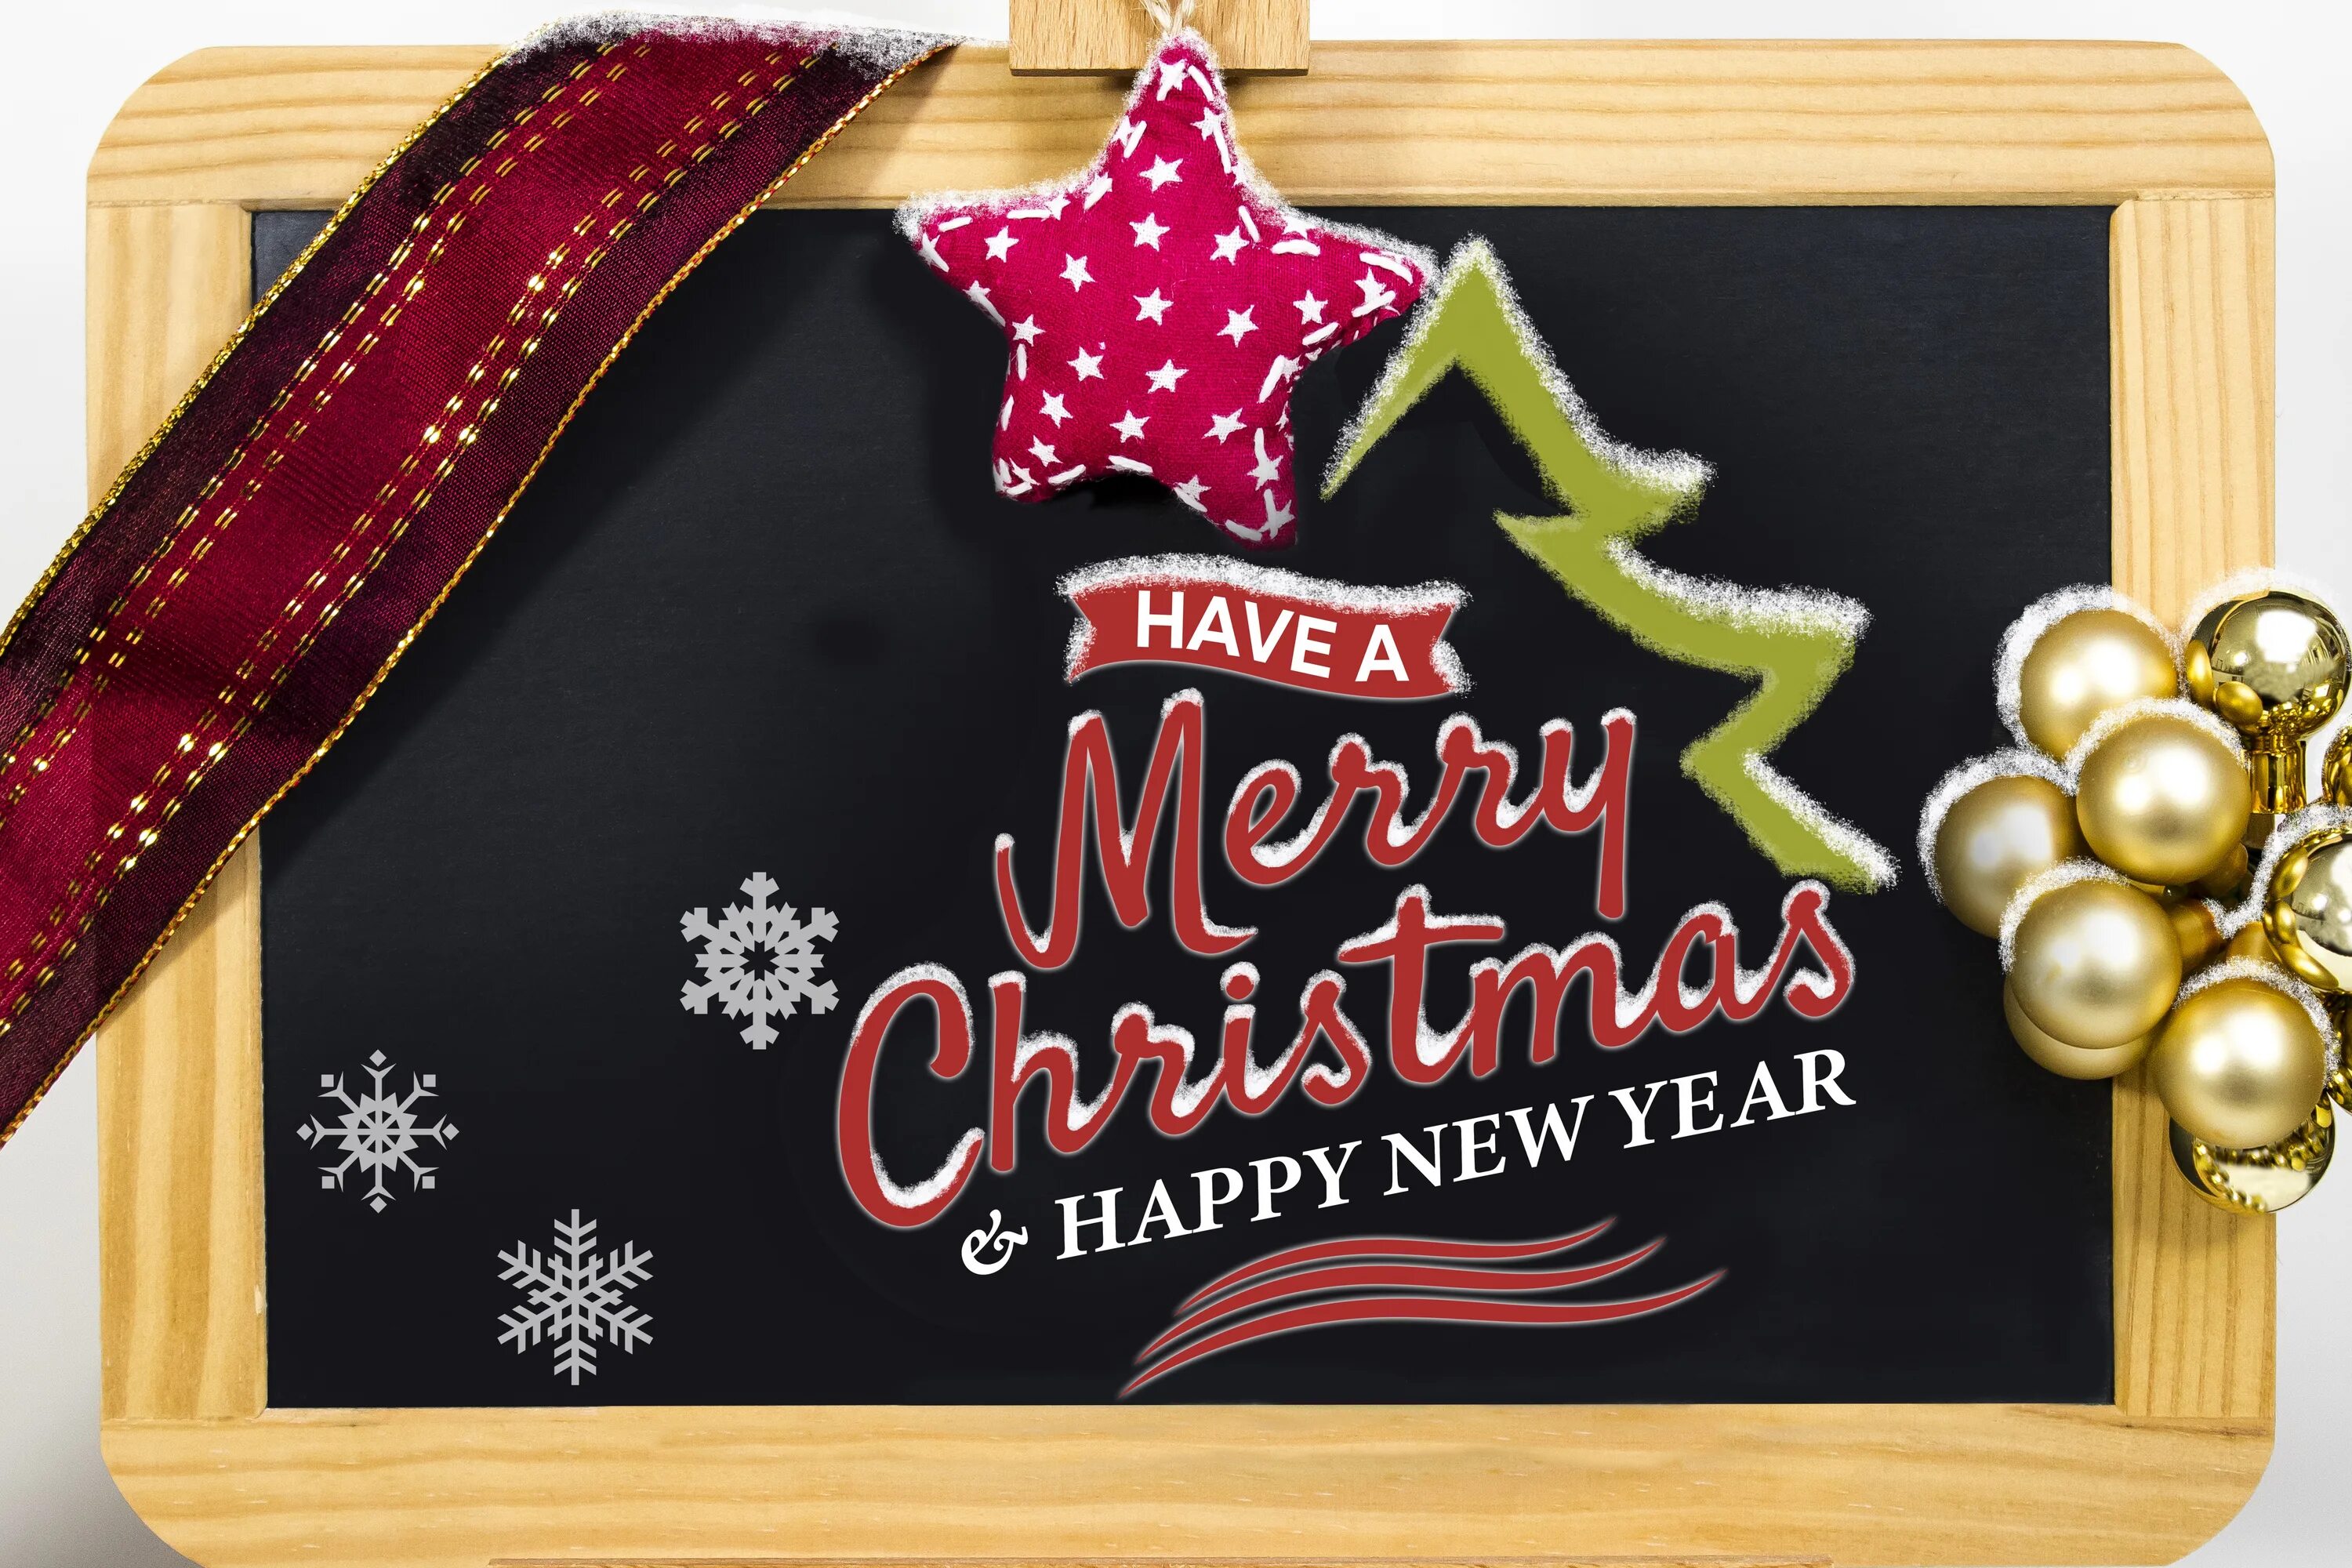 Merri critmec kneel open smail. Merry Christmas and Happy New year. С Рождеством на английском. Merry Christmas and Happy New year картинки. Счастливого нового года на английском.